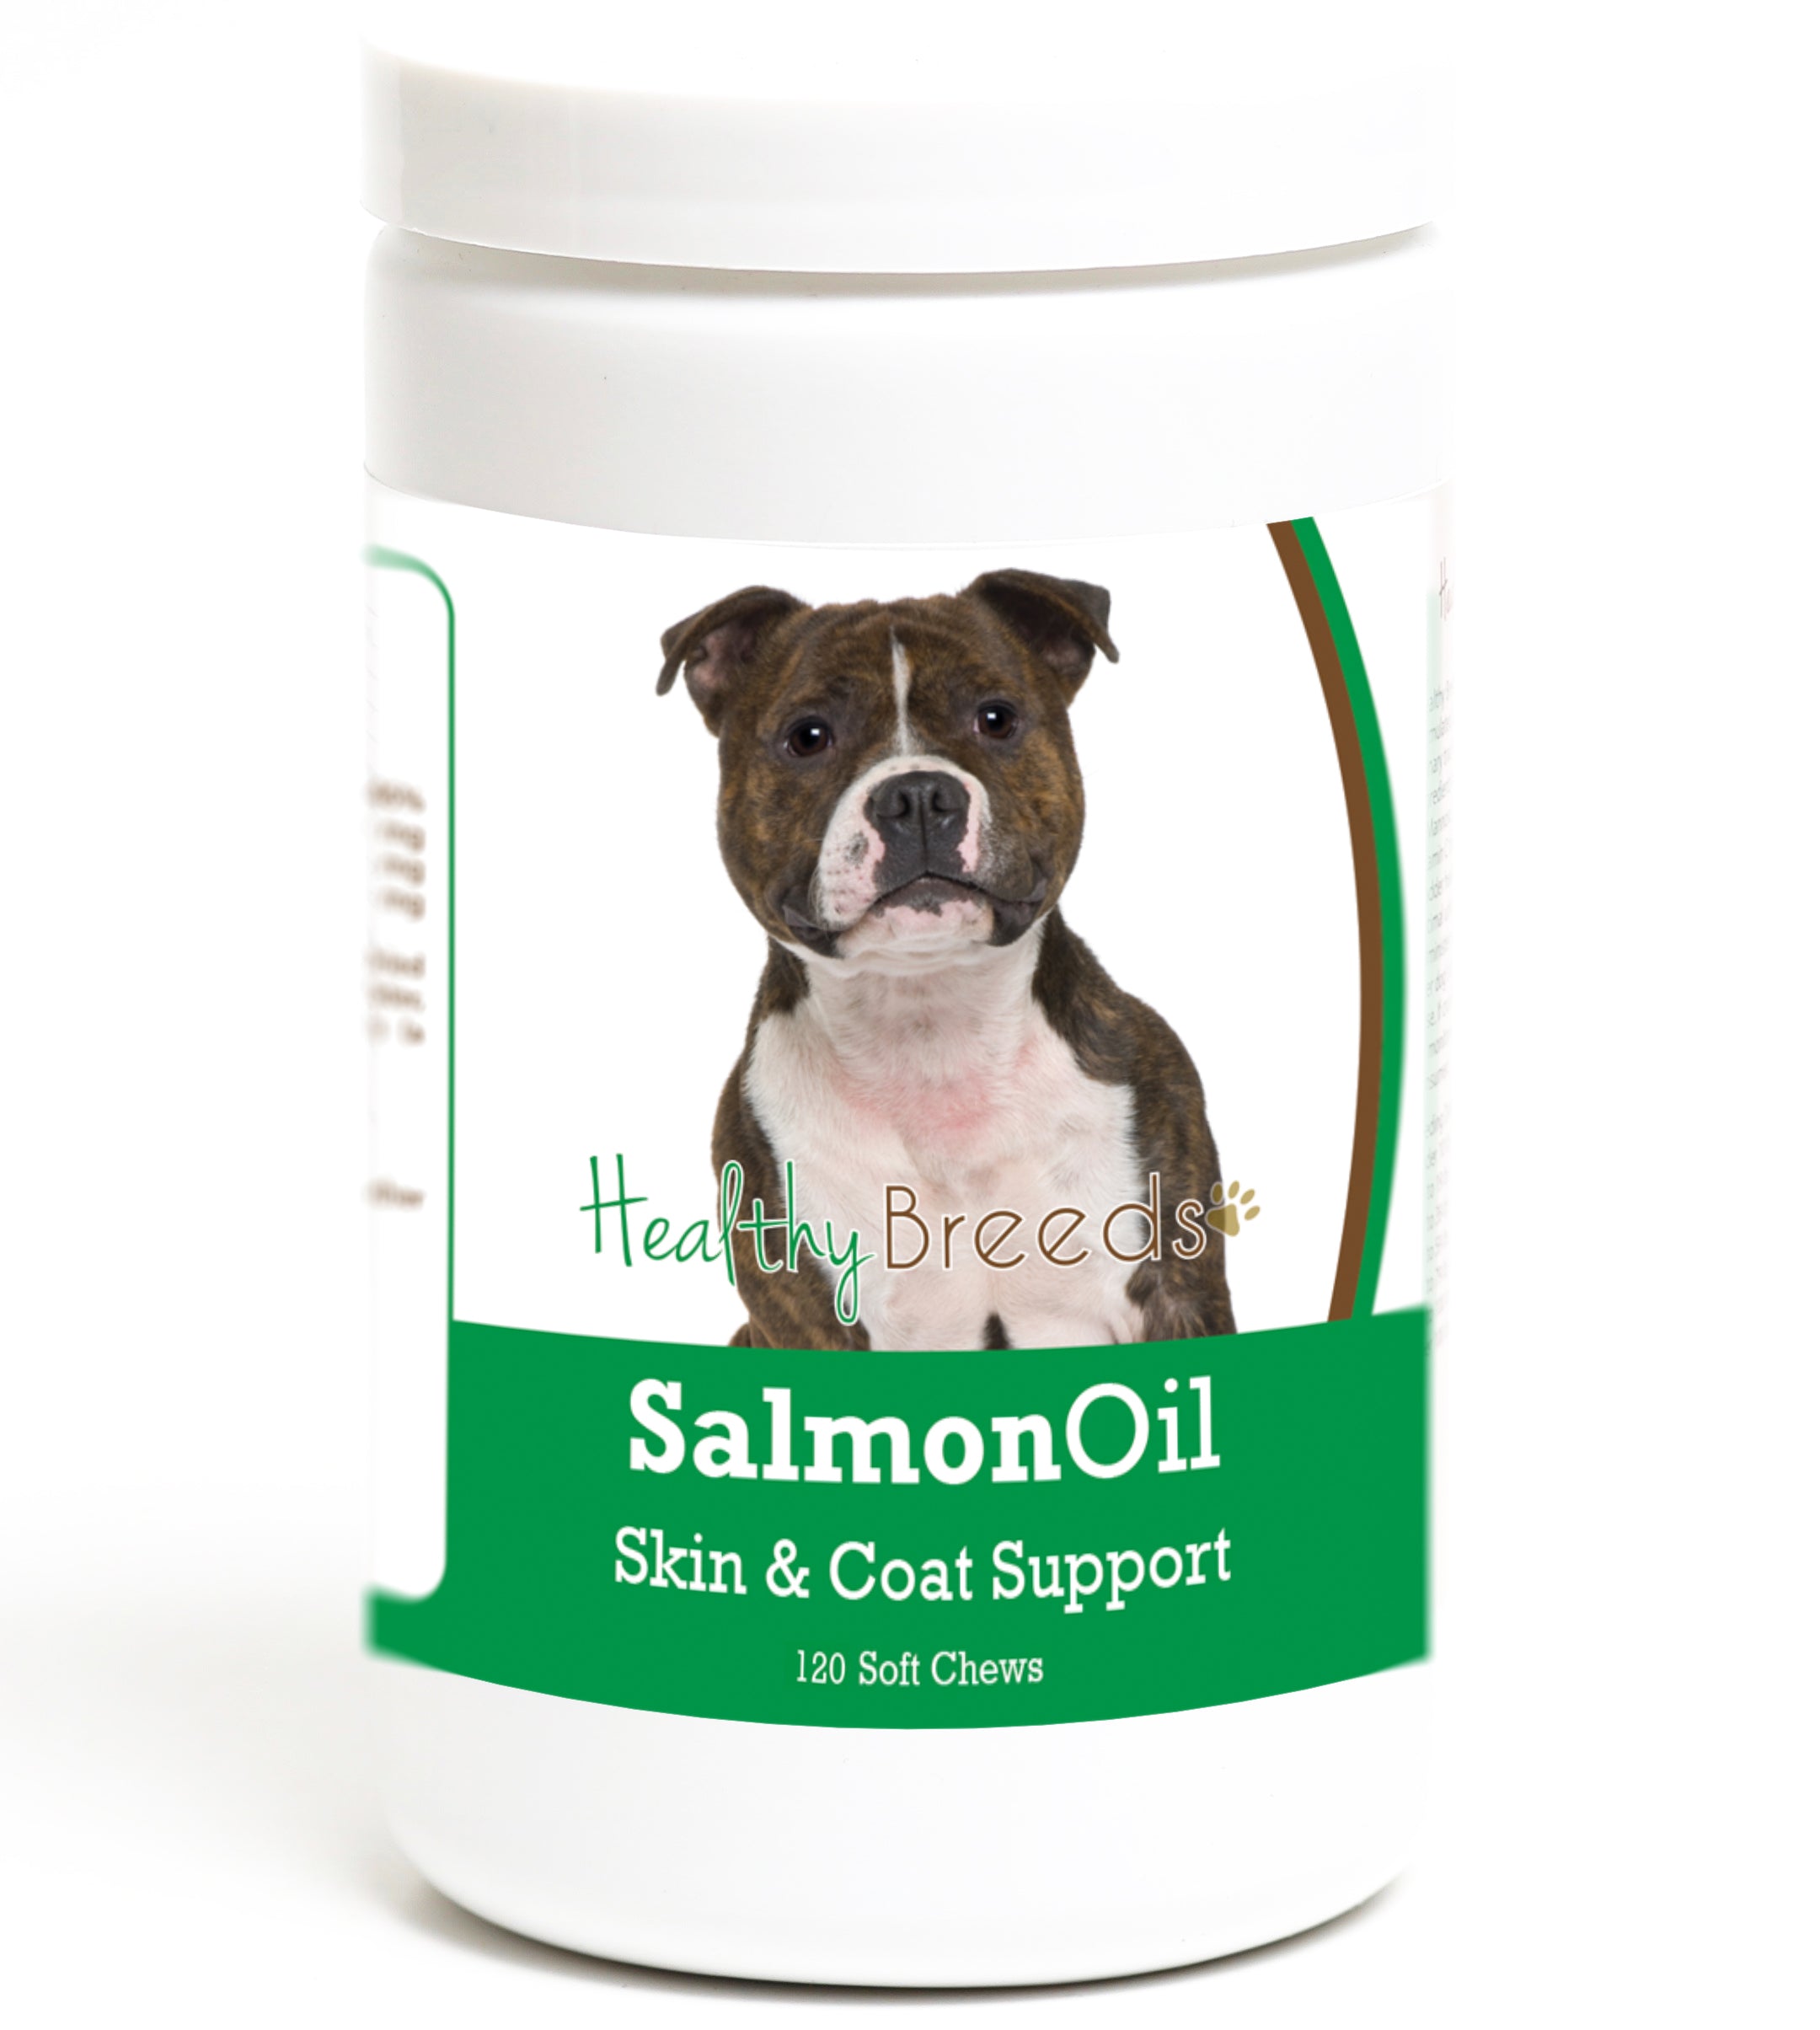 Staffordshire Bull Terrier Salmon Oil Soft Chews 120 Count